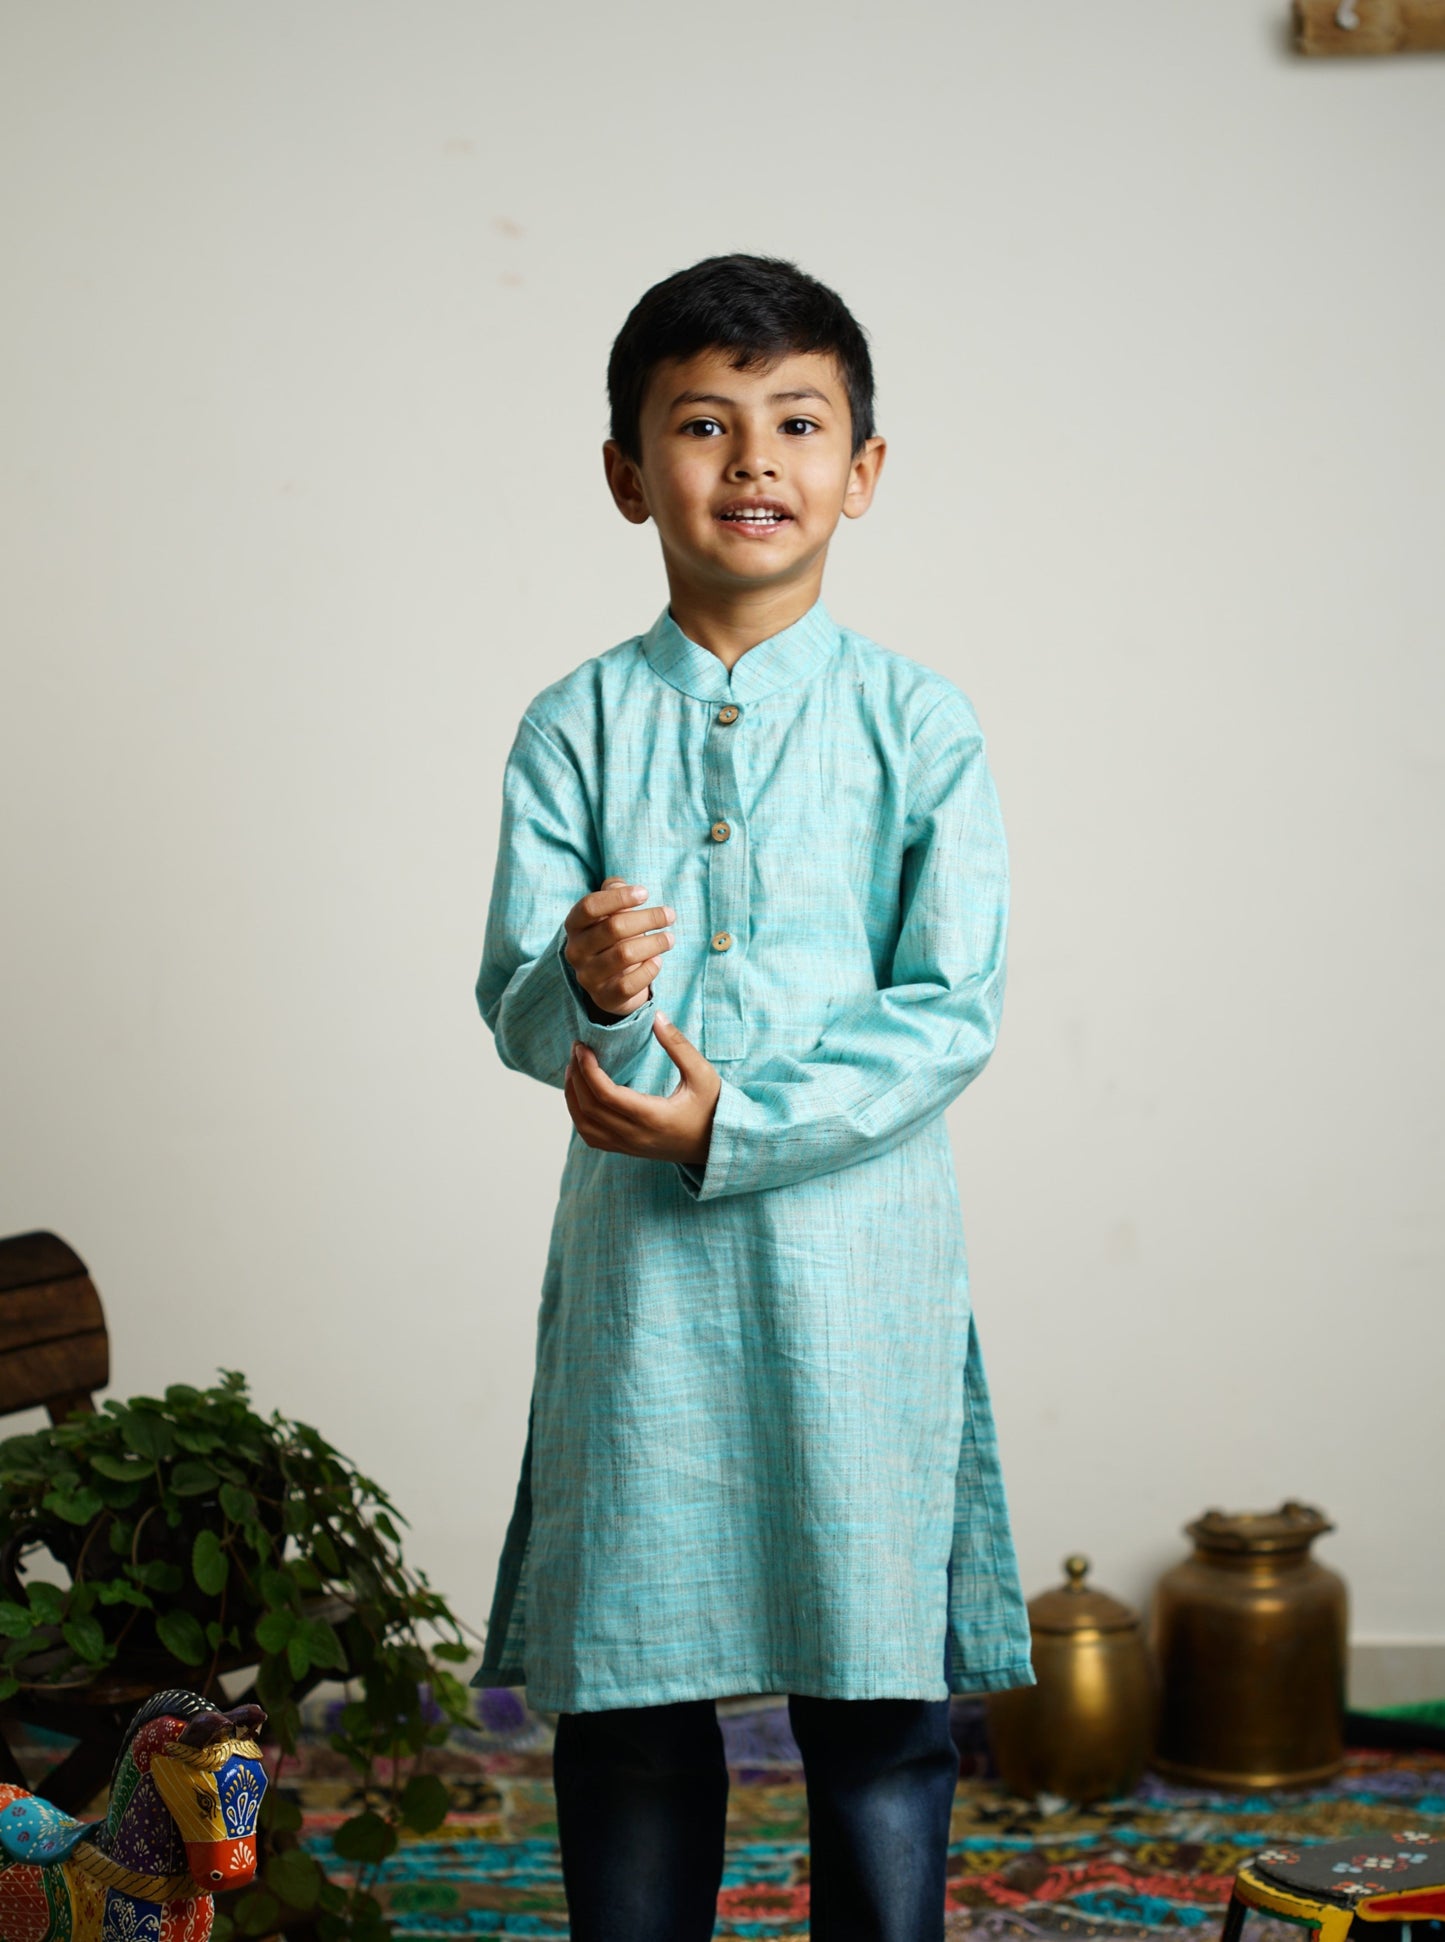 Sky Blue silk traditional ethnic brocade printed silk cotton kurta pyjama salwar suit pajama churidar set sherwani jacket for baby boy kids 